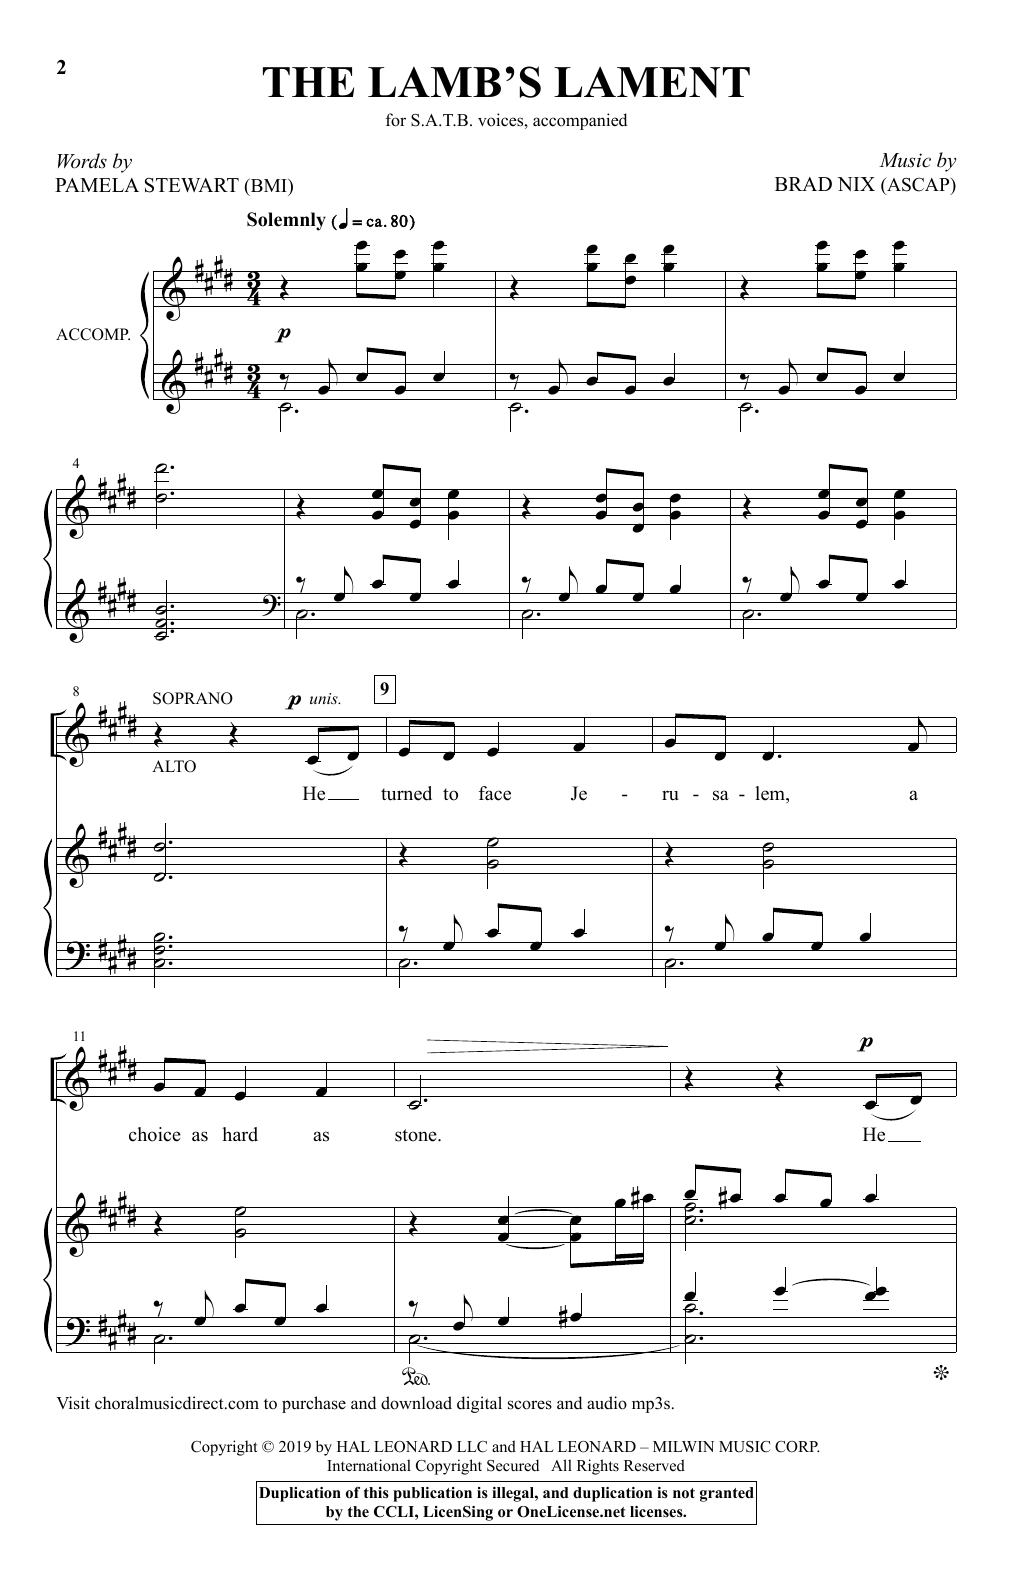 Pamela Stewart and Brad Nix The Lamb's Lament Sheet Music Notes & Chords for SATB Choir - Download or Print PDF